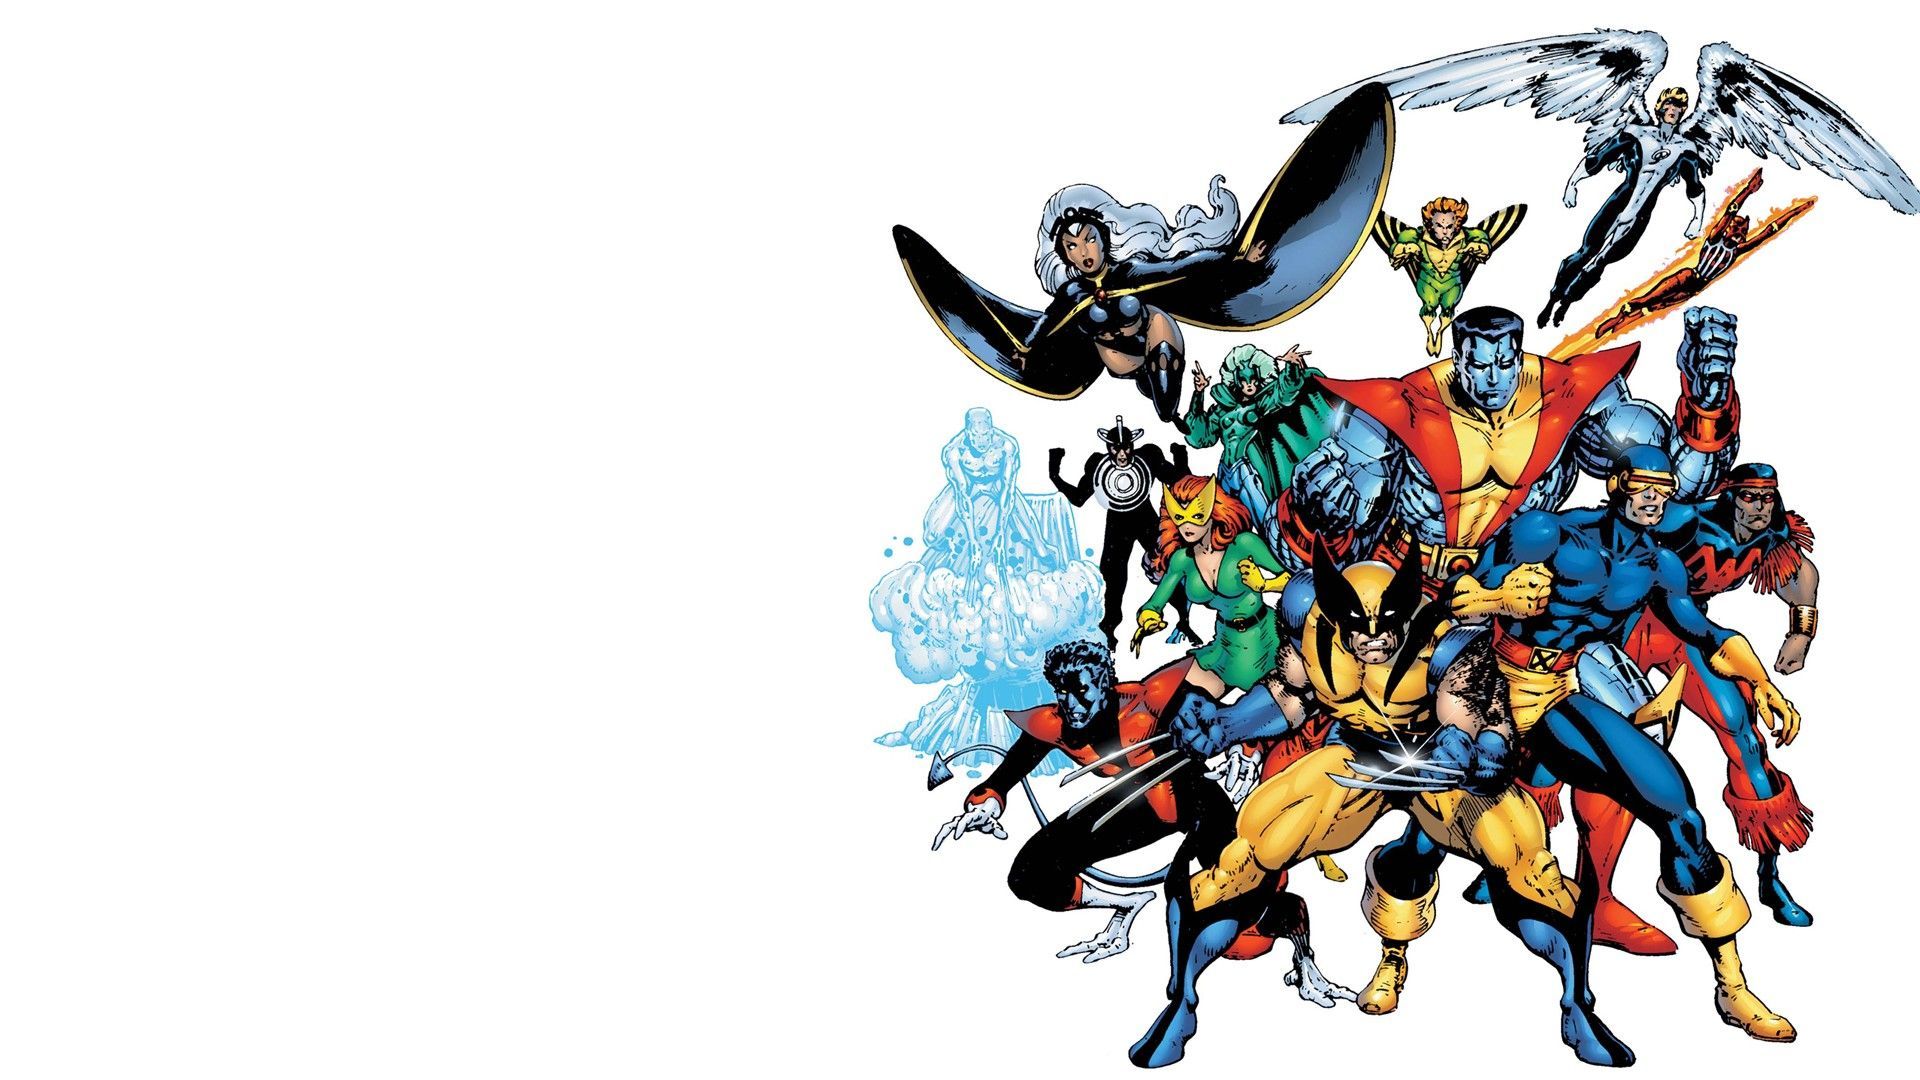 Wolverine The XMen Comic Wallpaper. Man wallpaper, Marvel wallpaper, Wolverine artwork